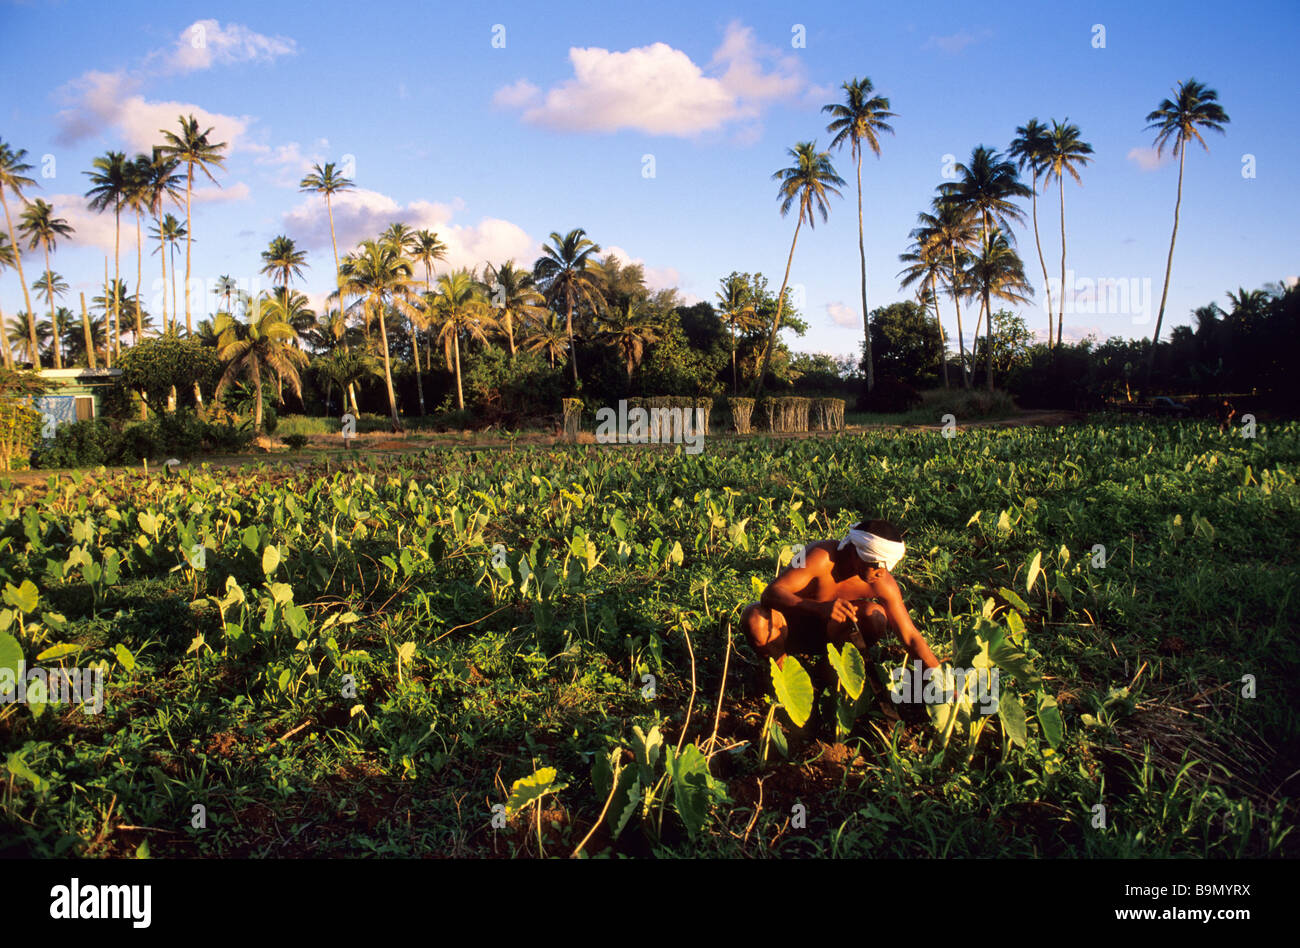 South Pacific Ocean, Samoan Archipelago, Upolu Island, plantation of taro (eatable tropical plant) Stock Photo